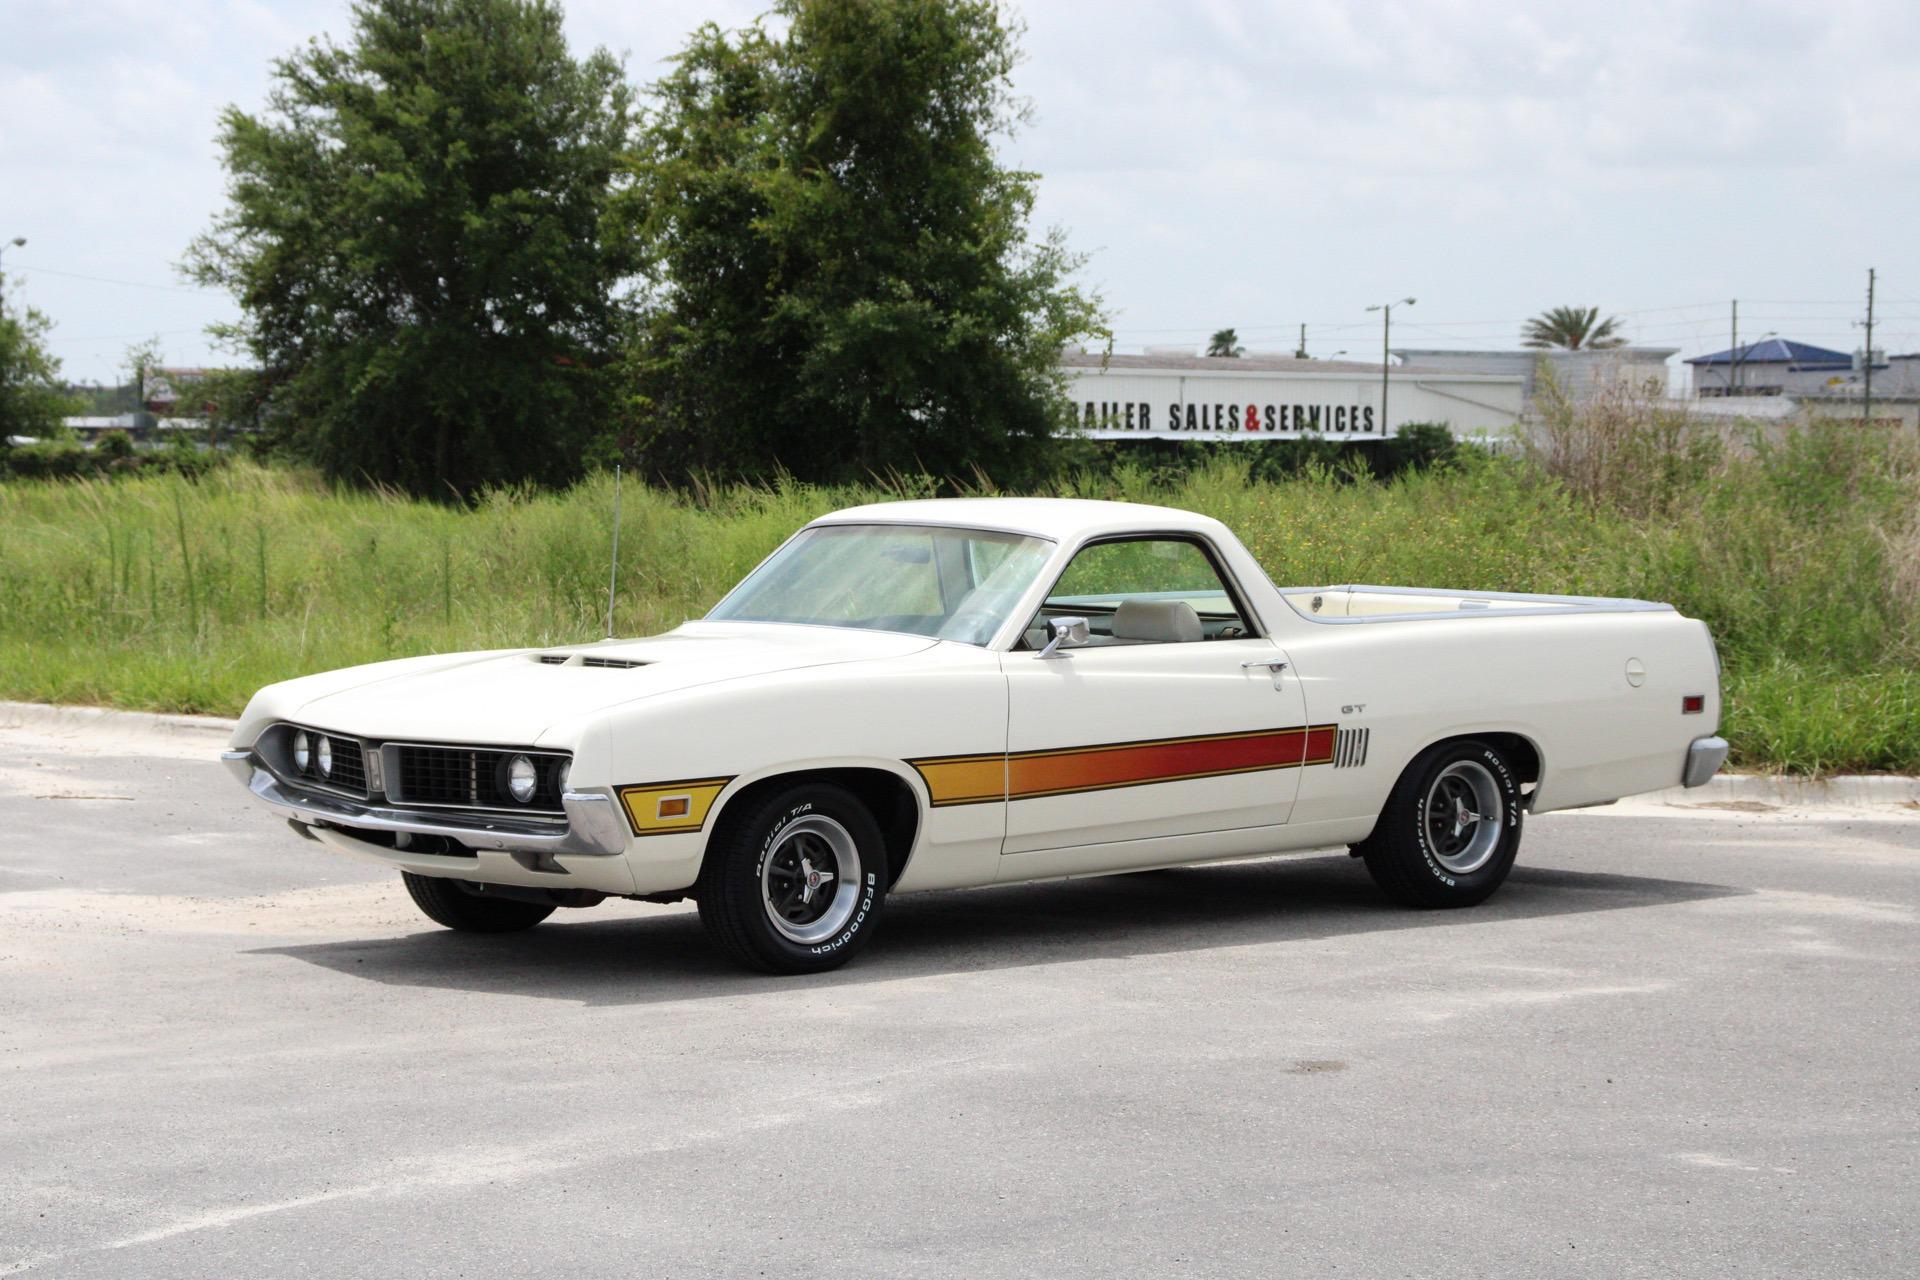 The 1970 Chevrolet SSR photos